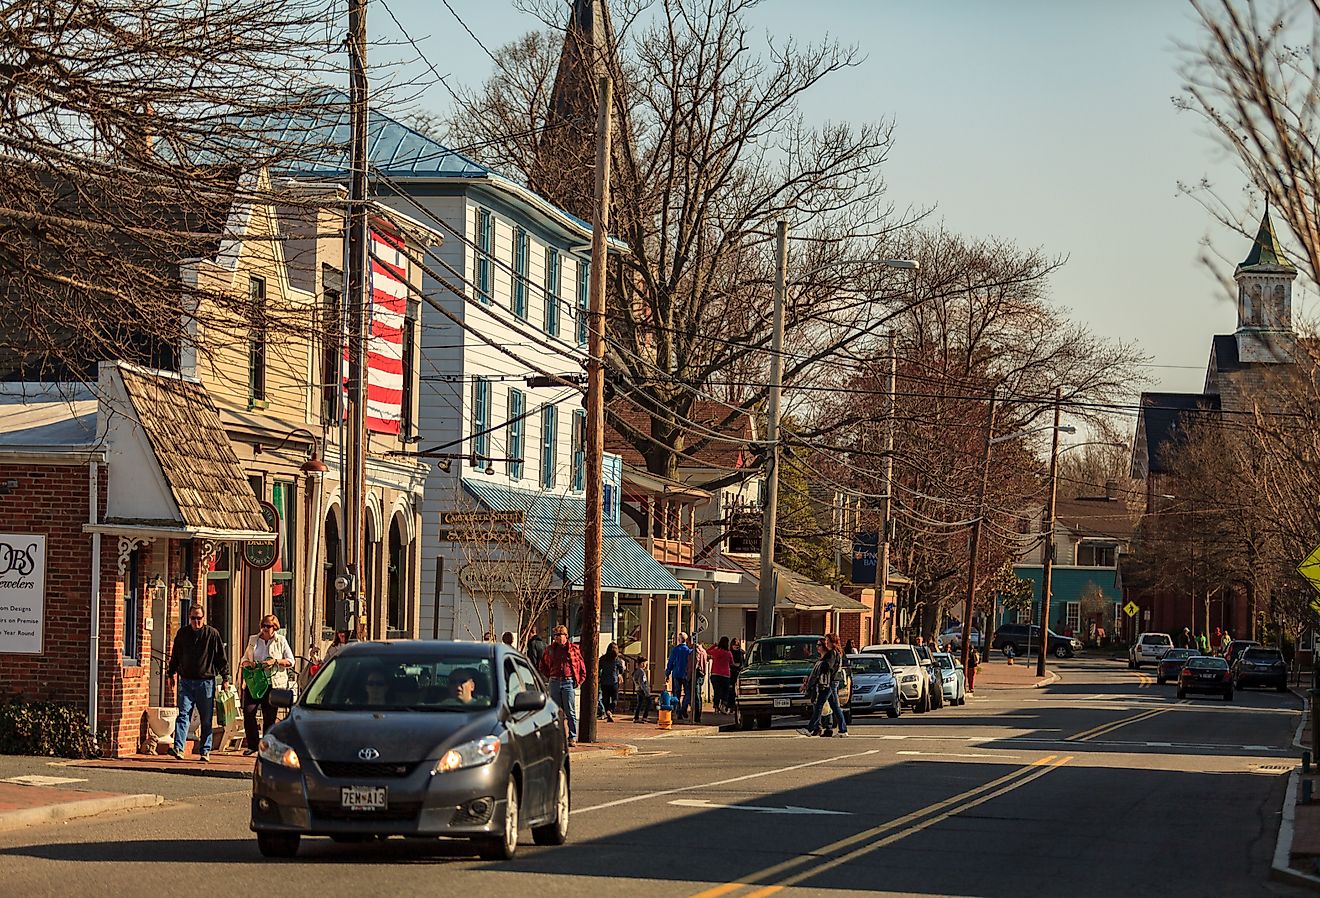 The Main Street of St Michaels, Maryland. Image credit George Sheldon via Shutterstock